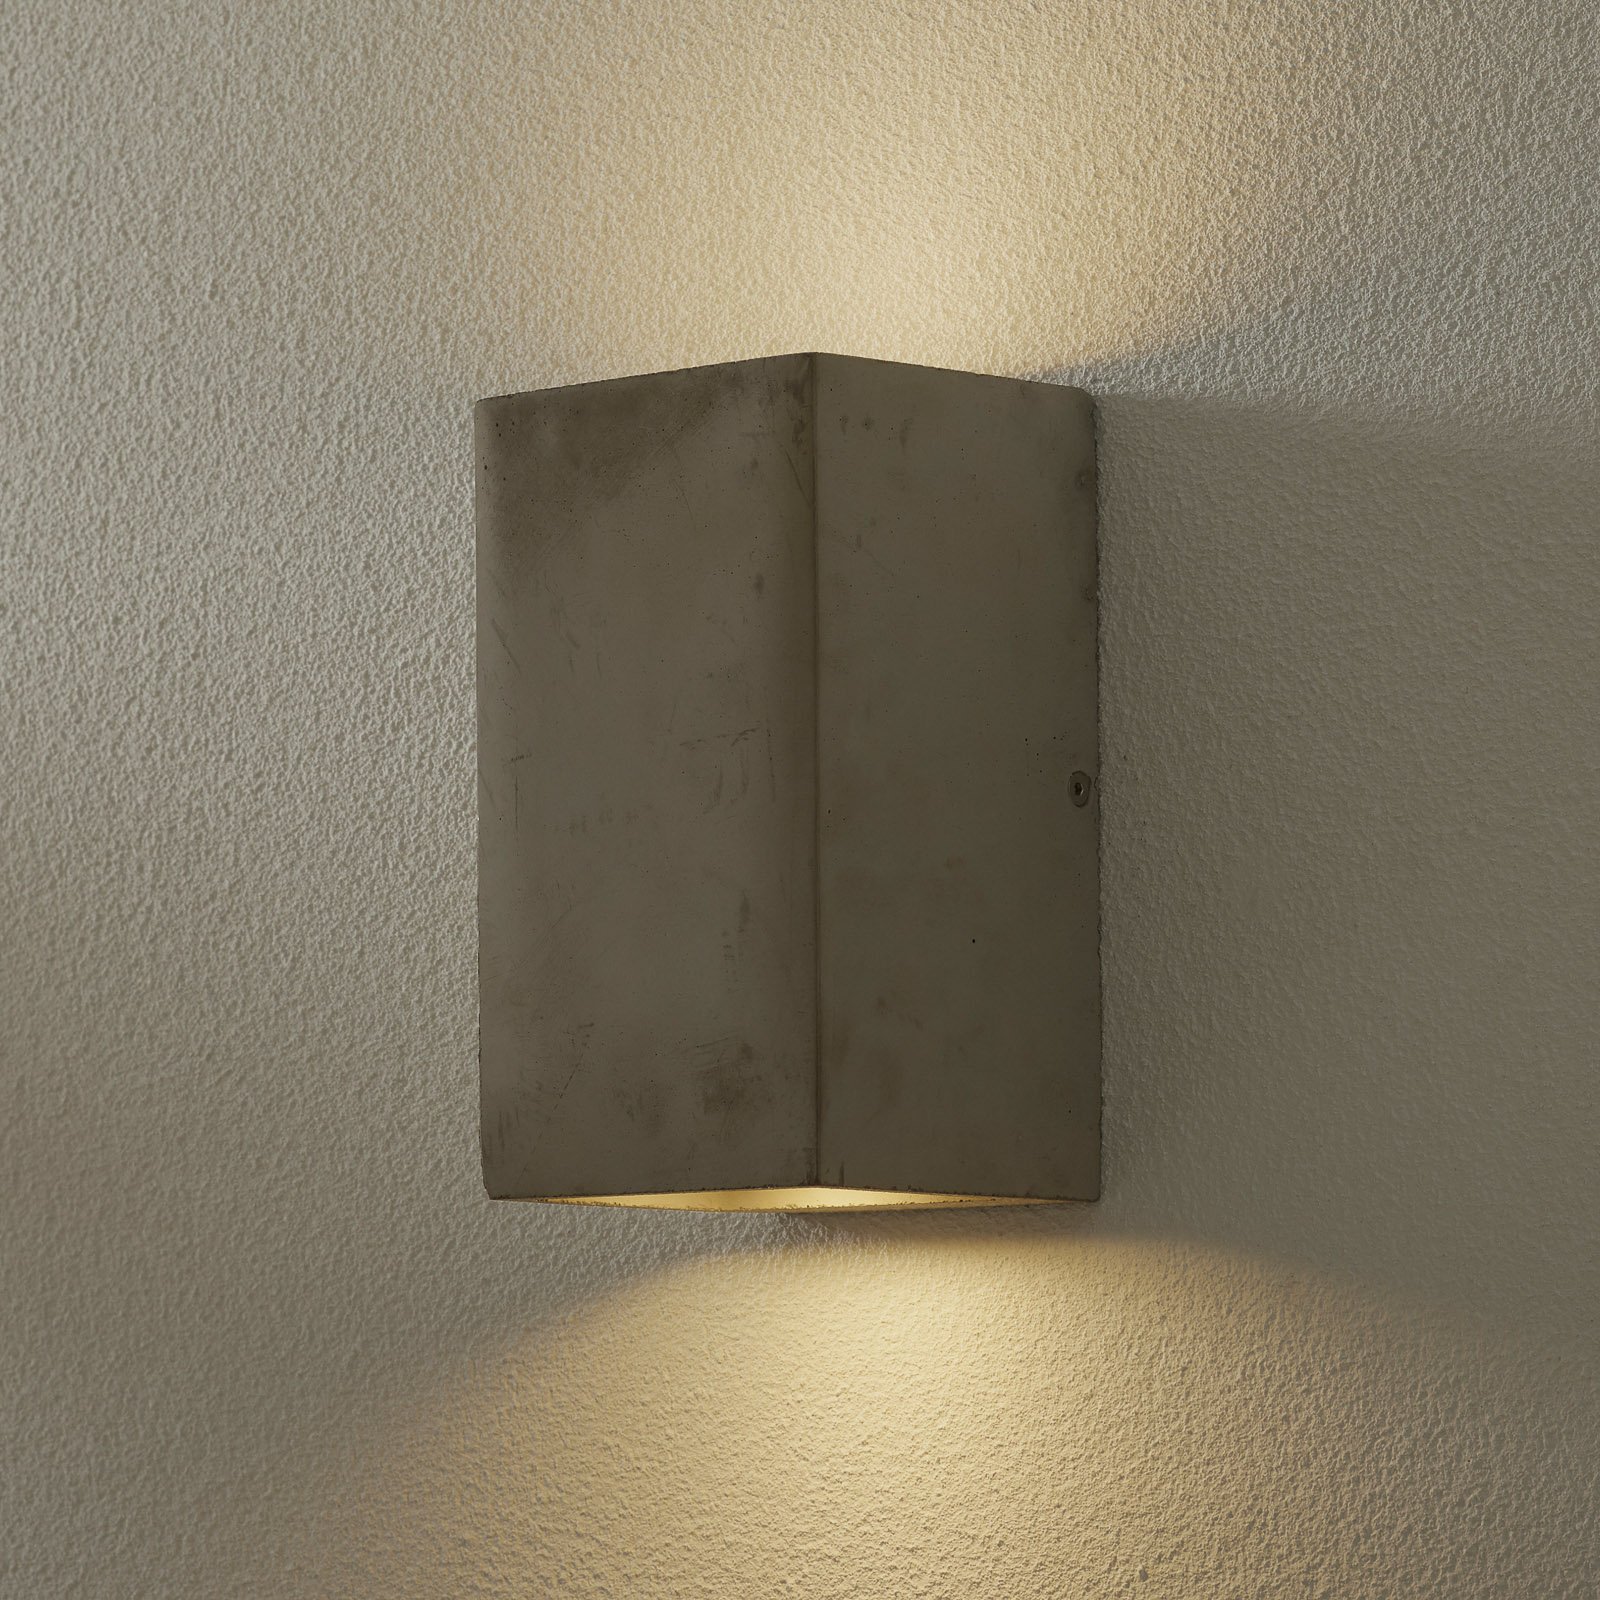 Kool wall light made of cement, height 19 cm